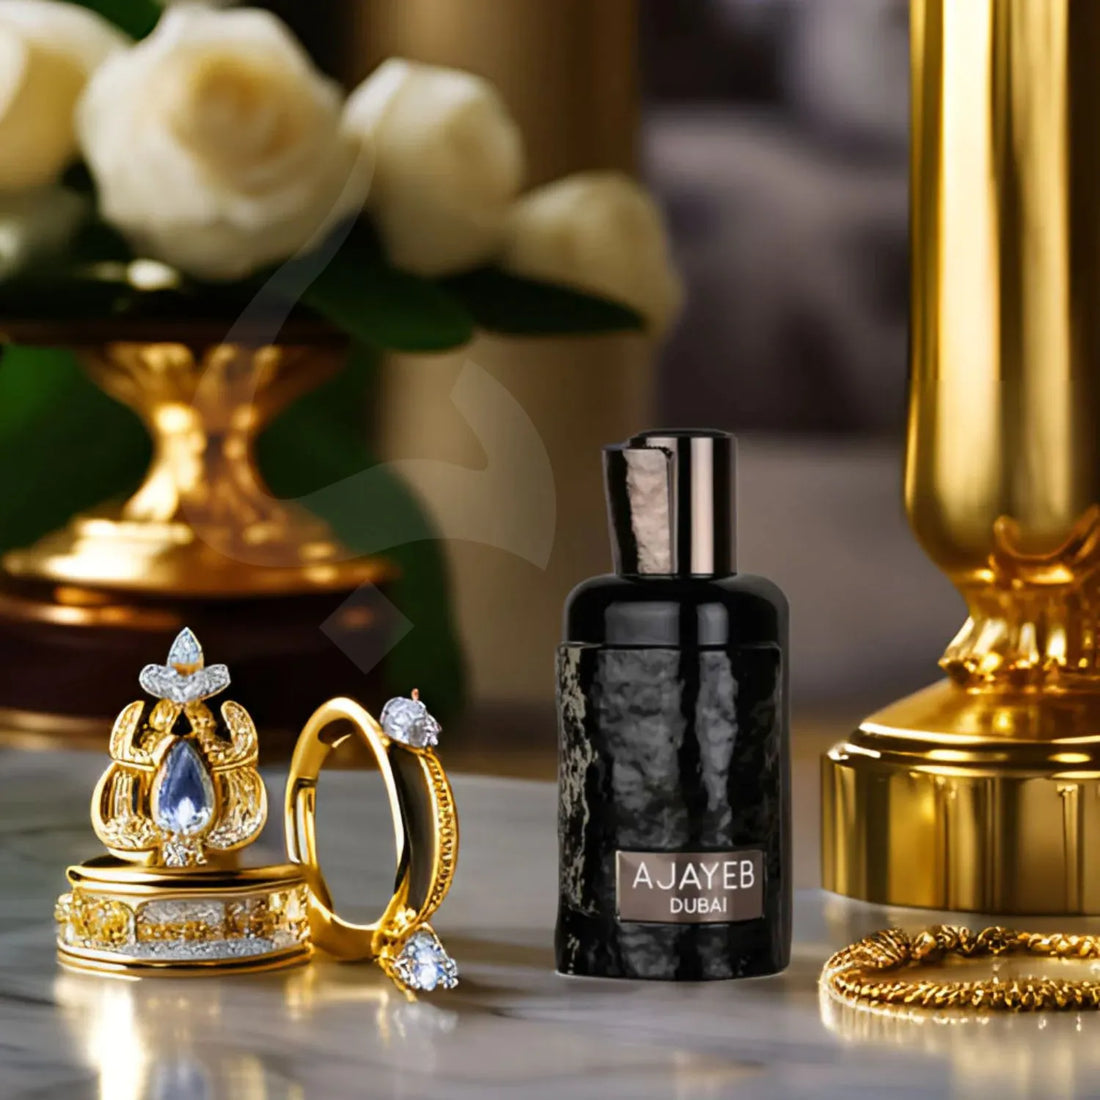 Ajayeb Dubai Perfume main